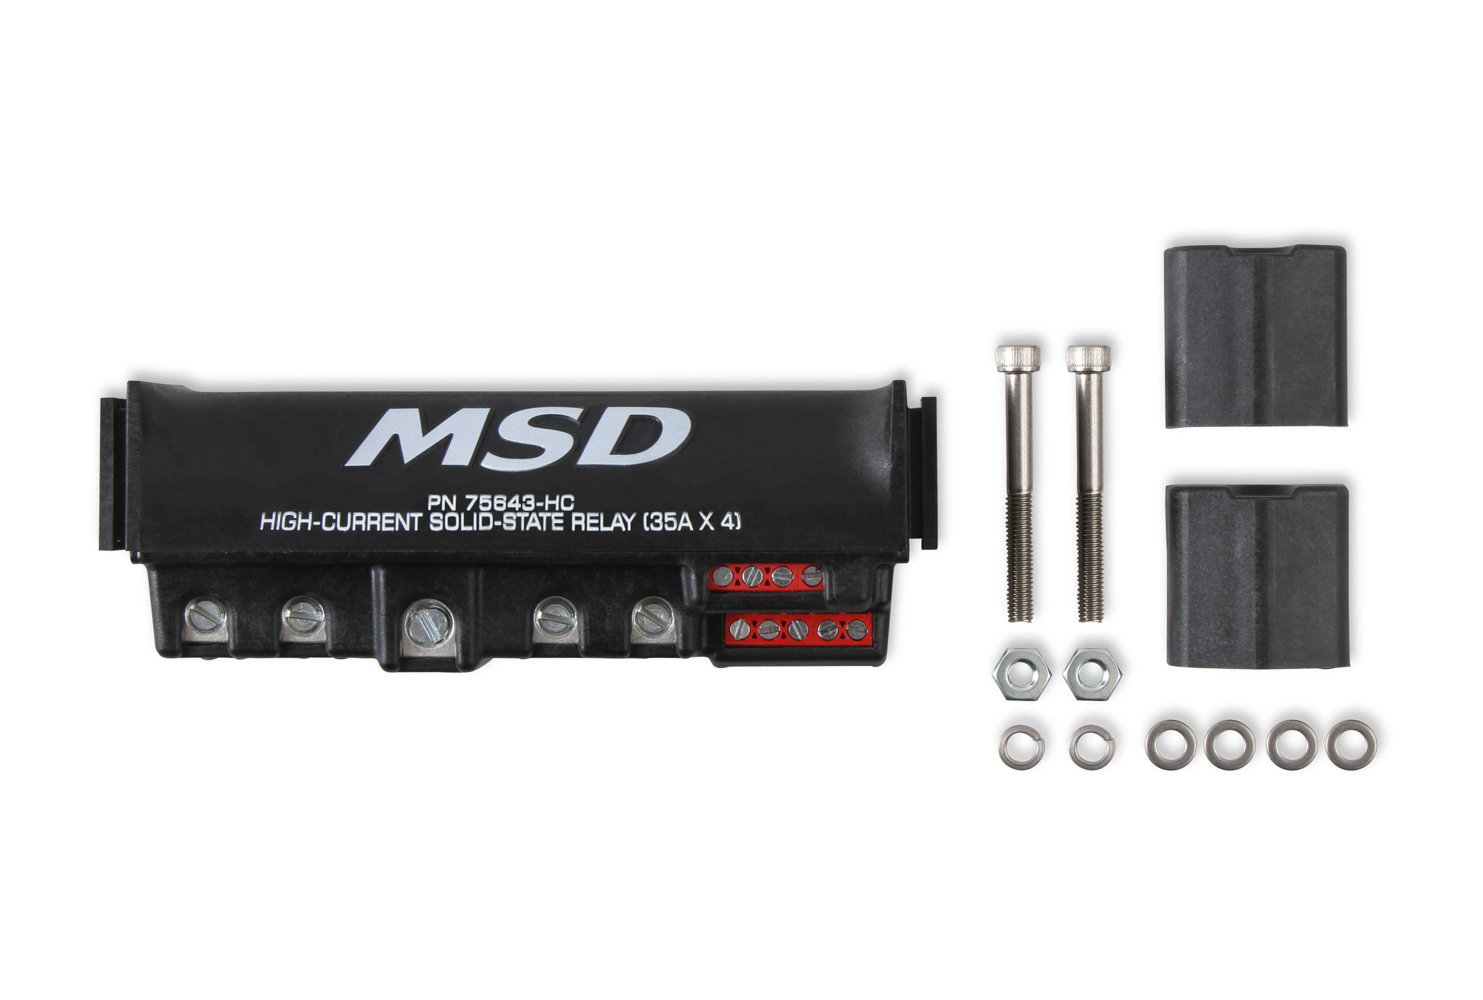 MSD-75643-HC #1